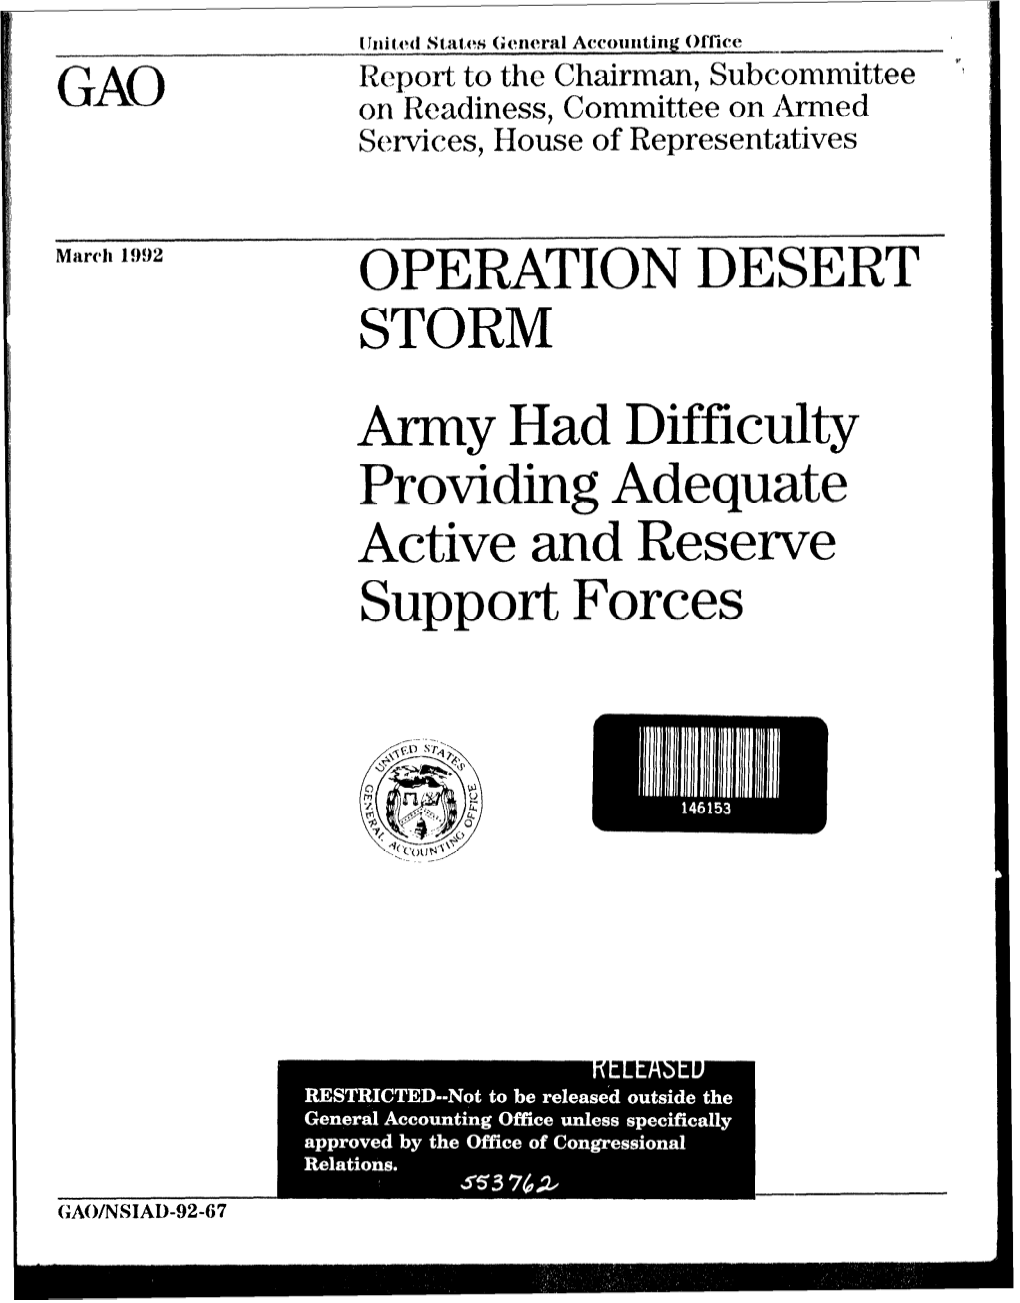 NSIAD-92-67 Operation Desert Storm Executive Summary